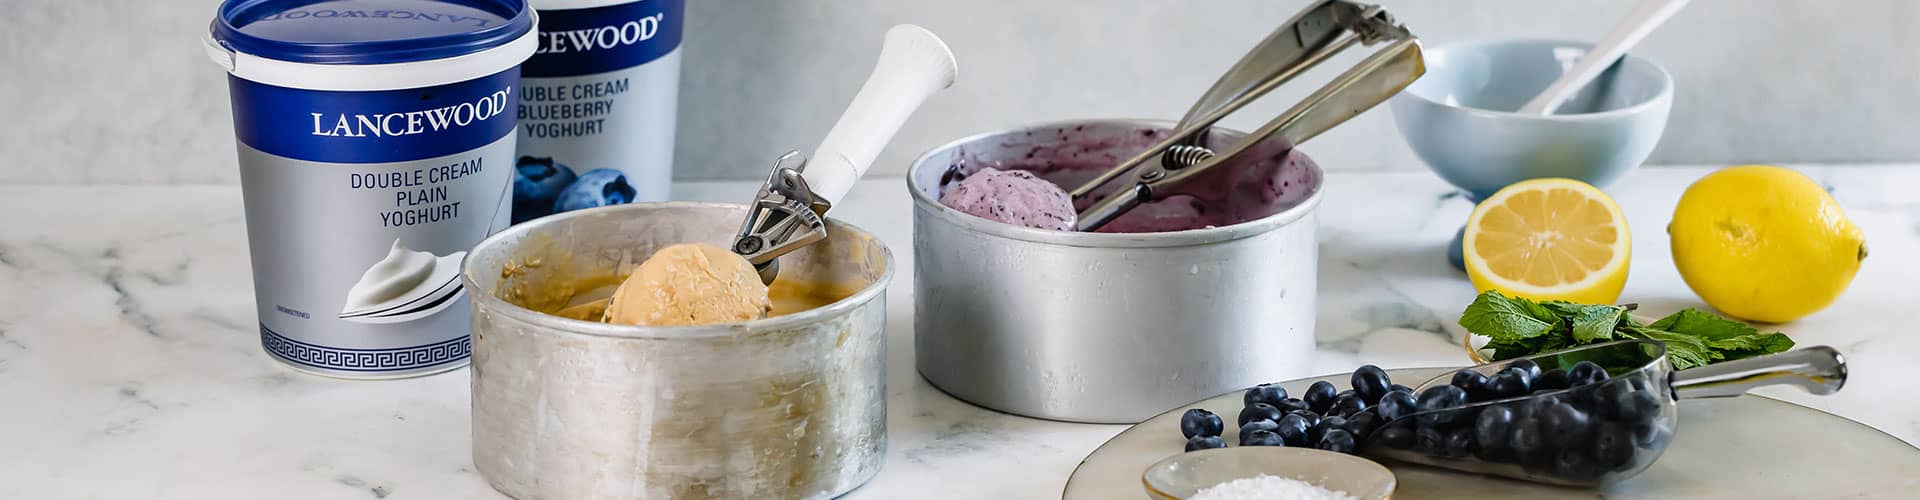 Lancewood Creamy Frozen Yoghurt 2-Ways